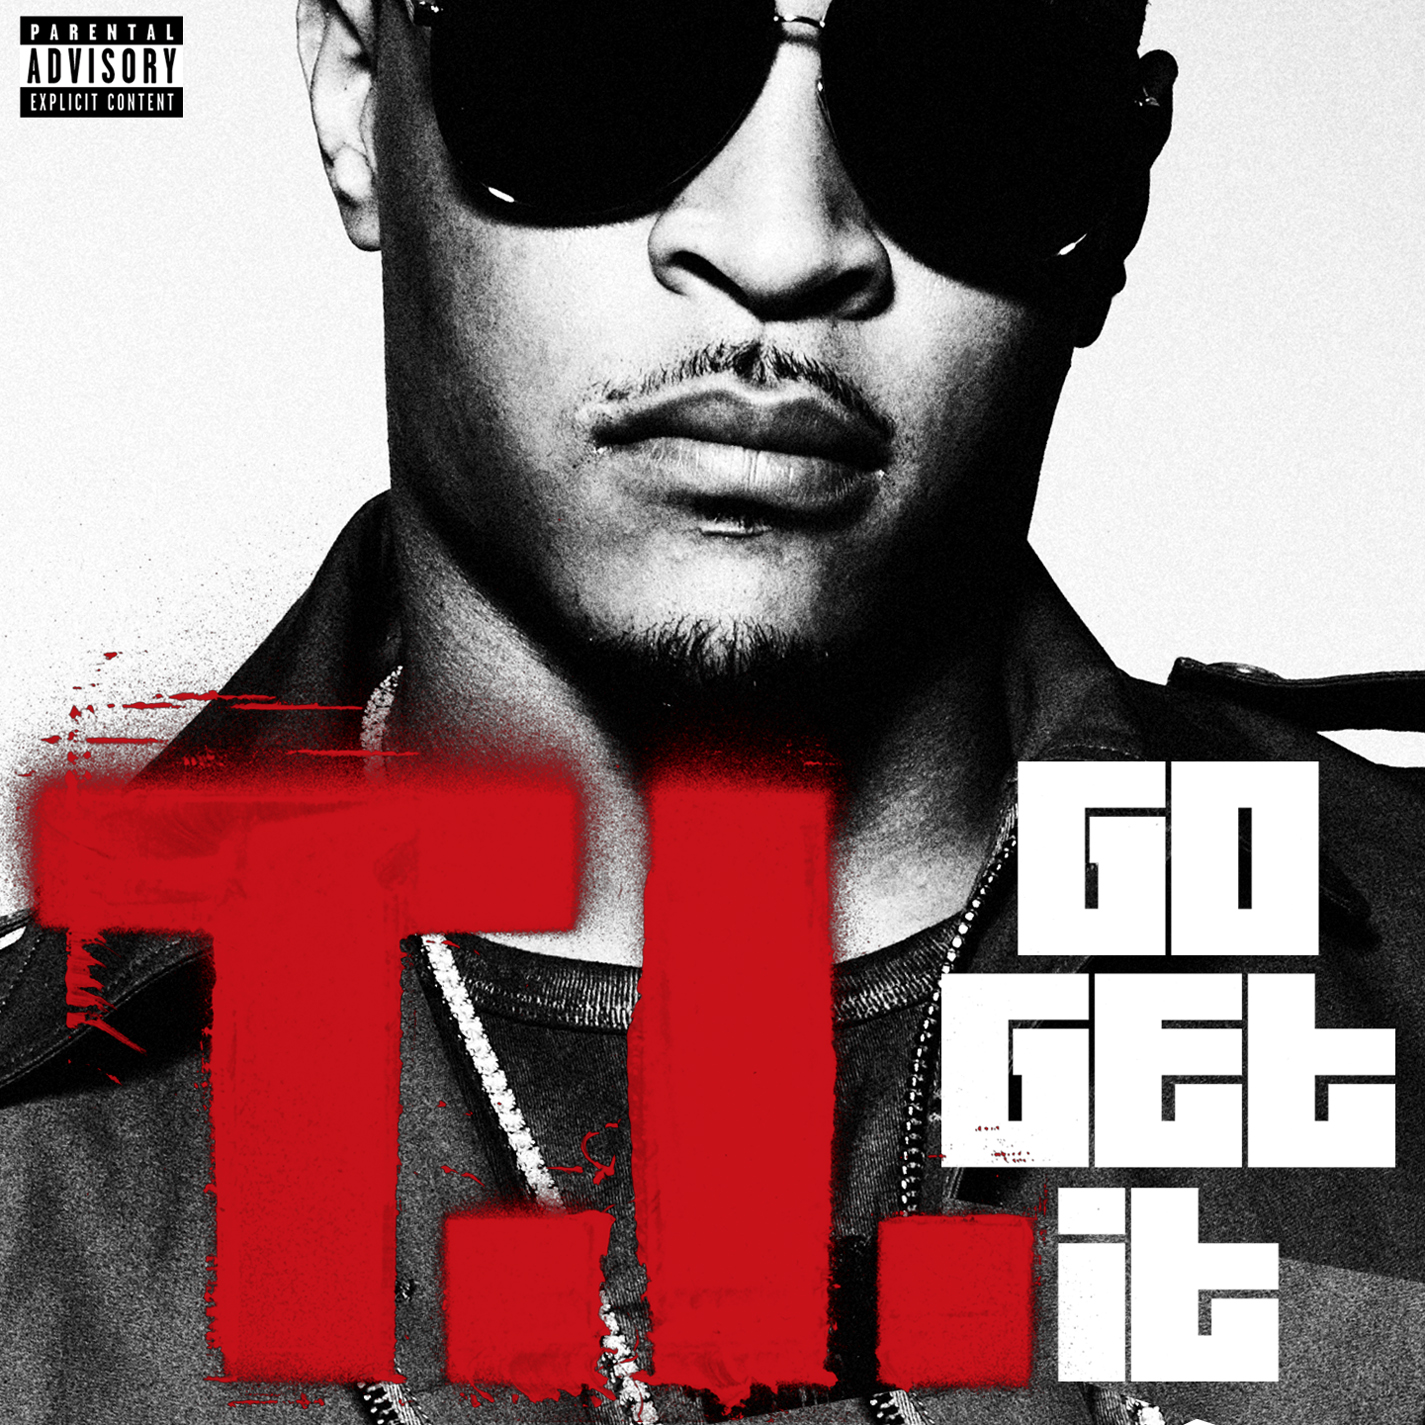 Download T.I. - Go Get It [Explicit] by Atlantic Records mp3 - Soundcloud  to mp3 converter